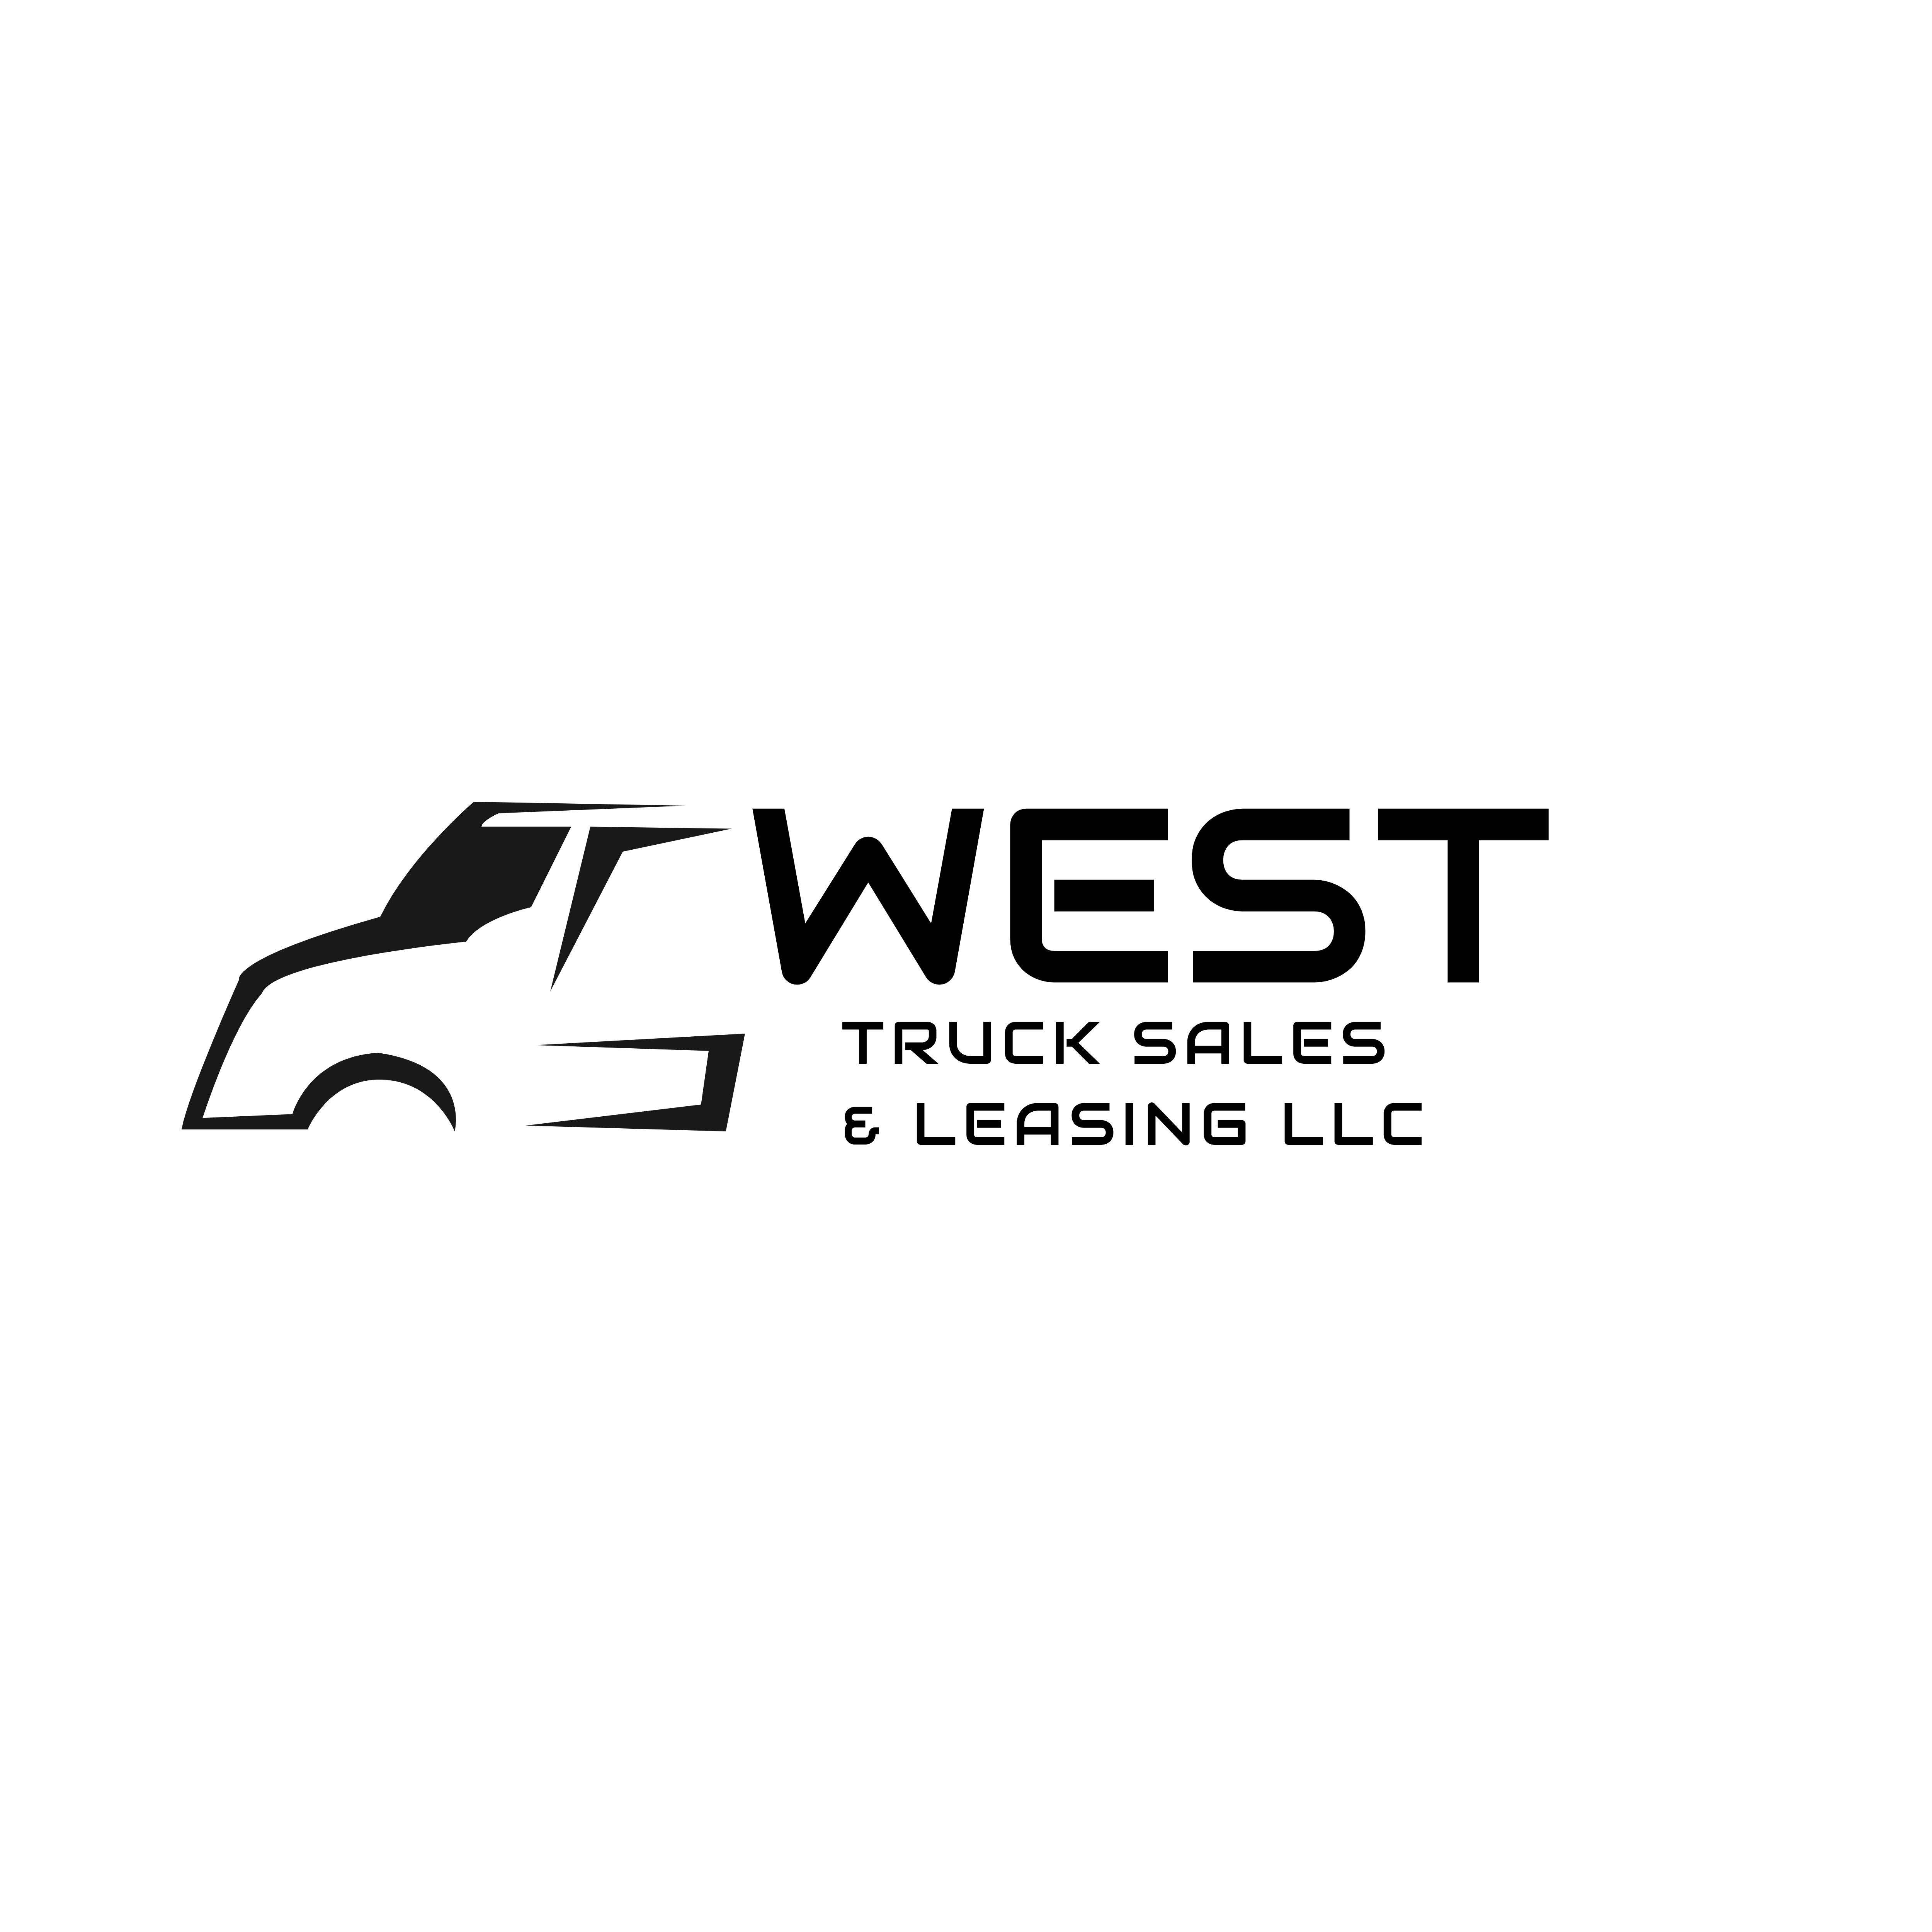 West Truck Sales & Leasing